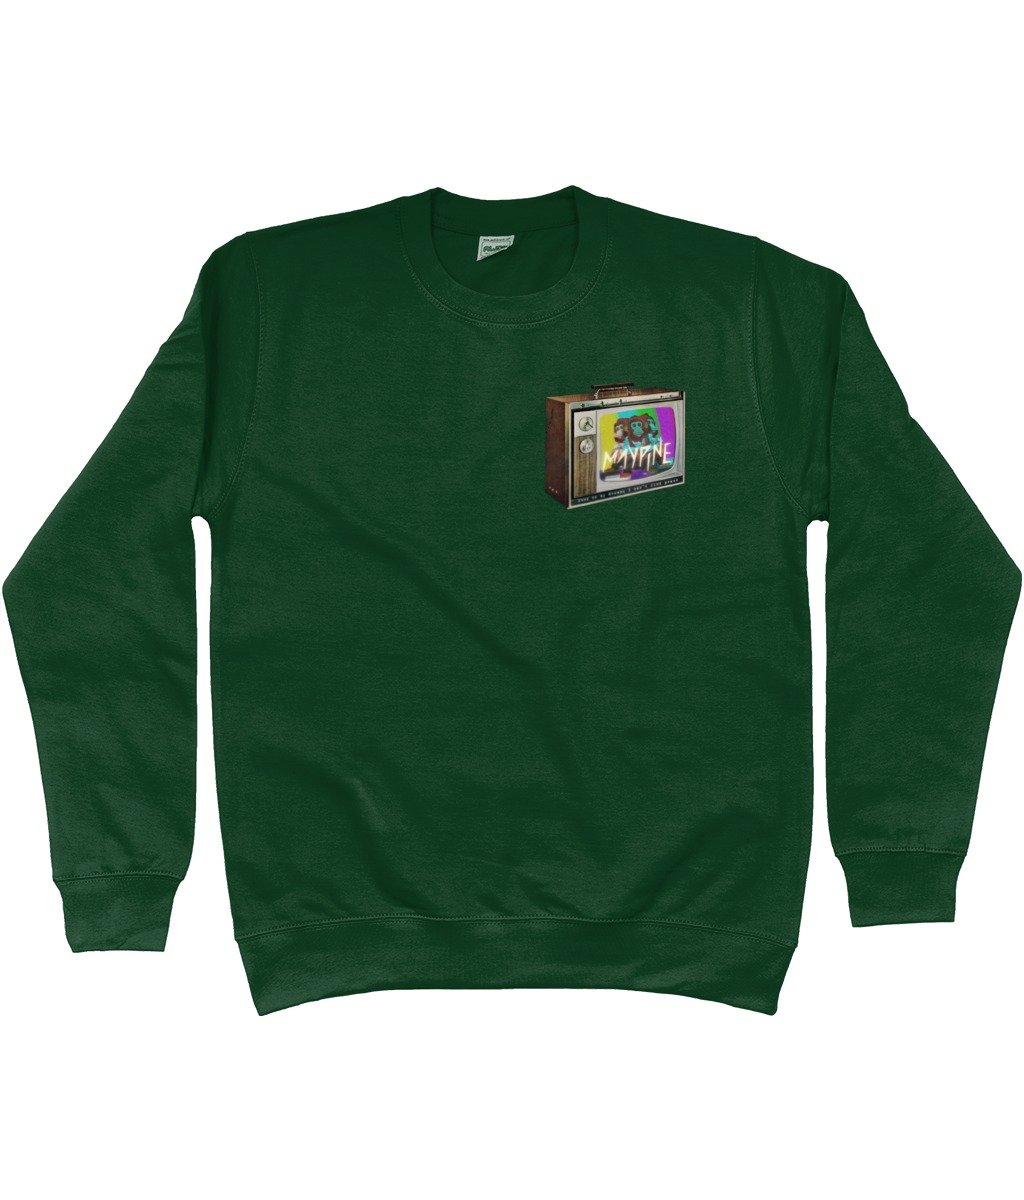 Image of Green MAYPINE Sweater